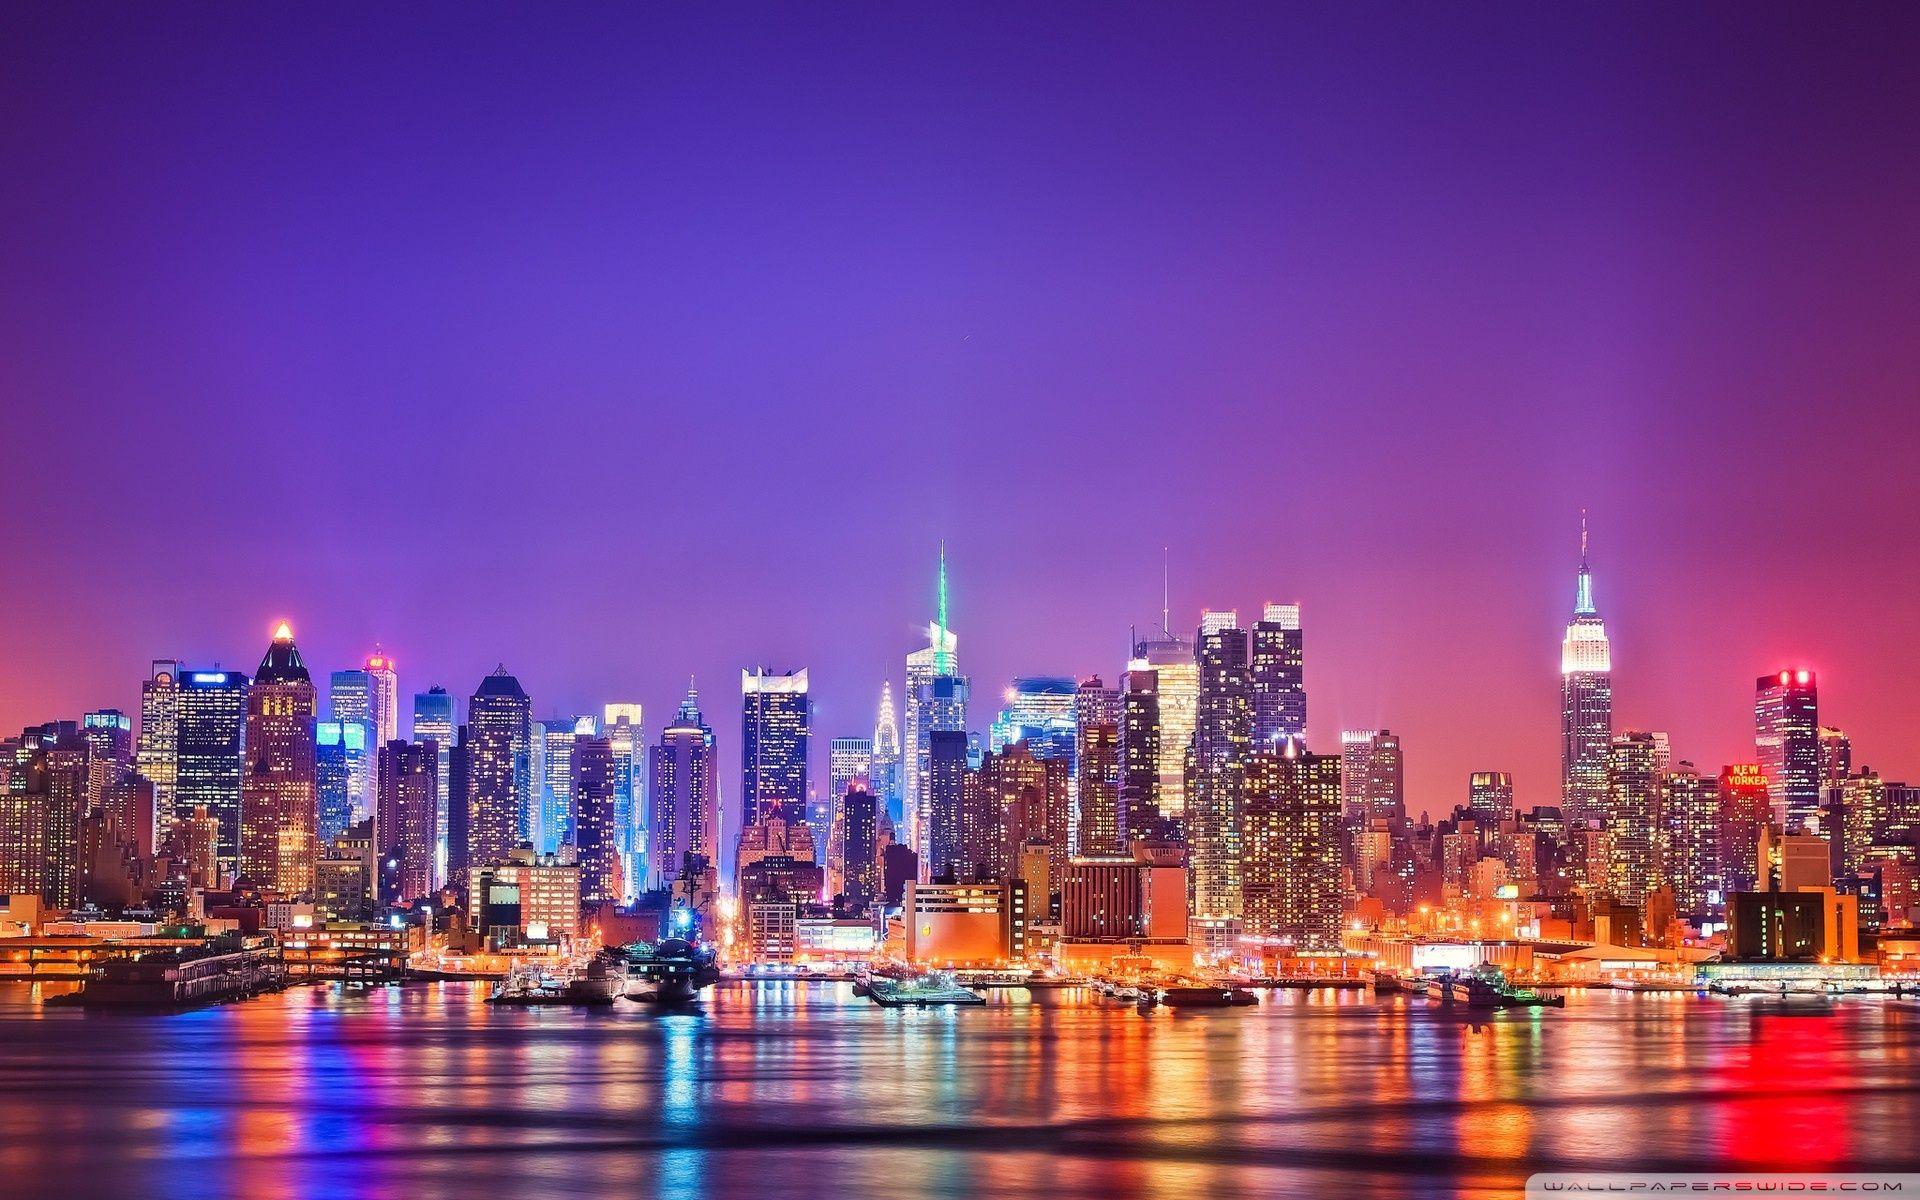 New York City Skyline at Night Ultra HD Desktop Background Wallpaper for 4K UHD TV, Tablet